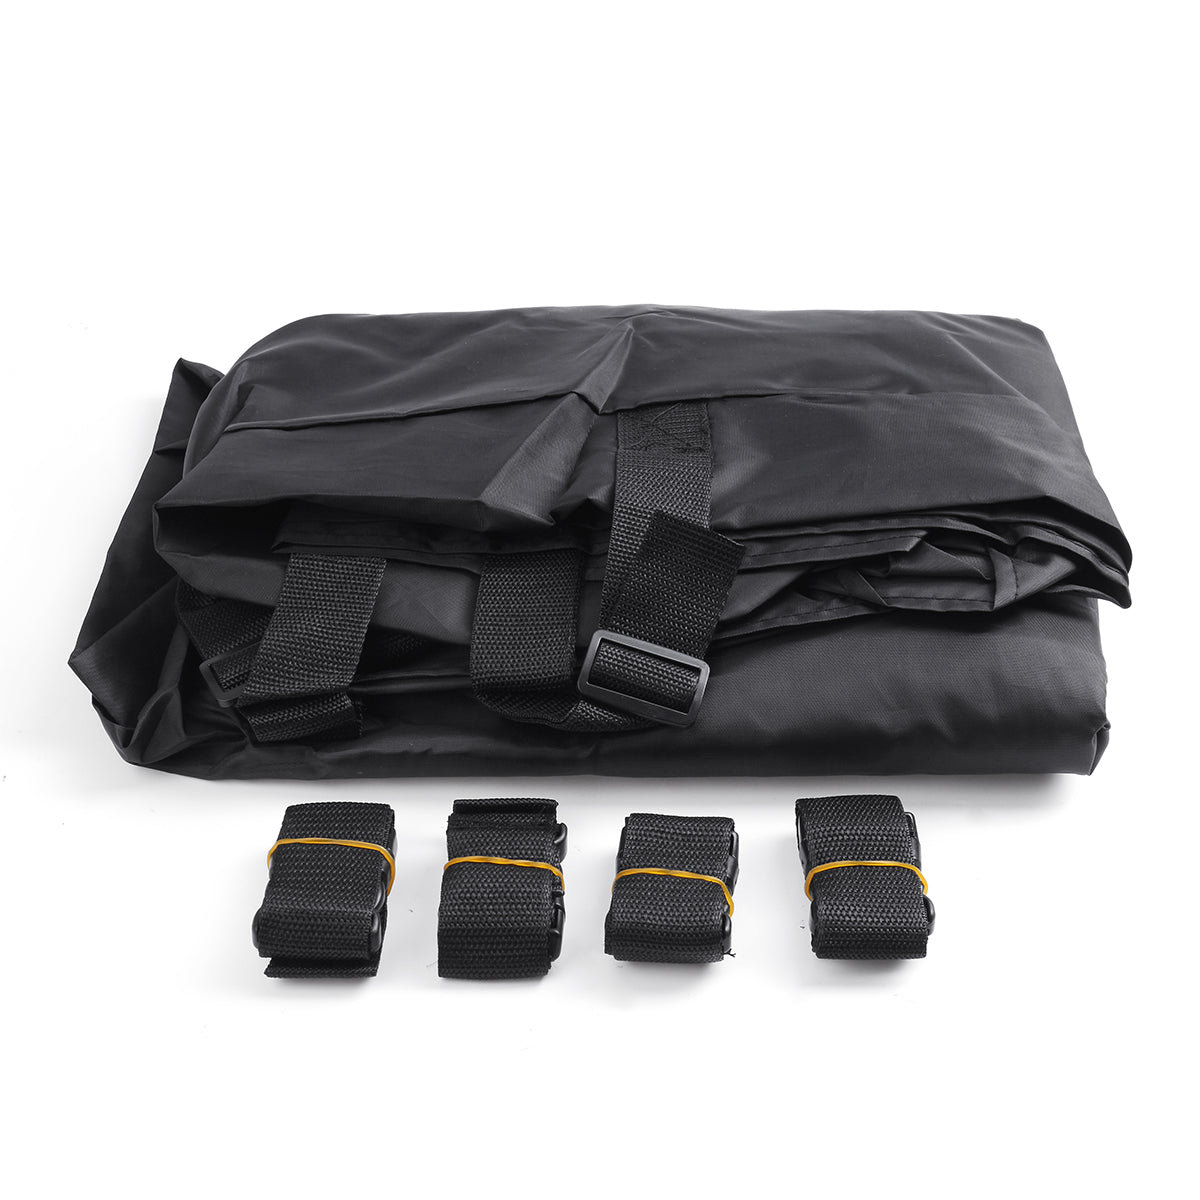 145*80*45cm Car Trunk Cargo Roof Top Carrier Bag Rack Storage Bag Luggage Rooftop Waterproof - Auto GoShop